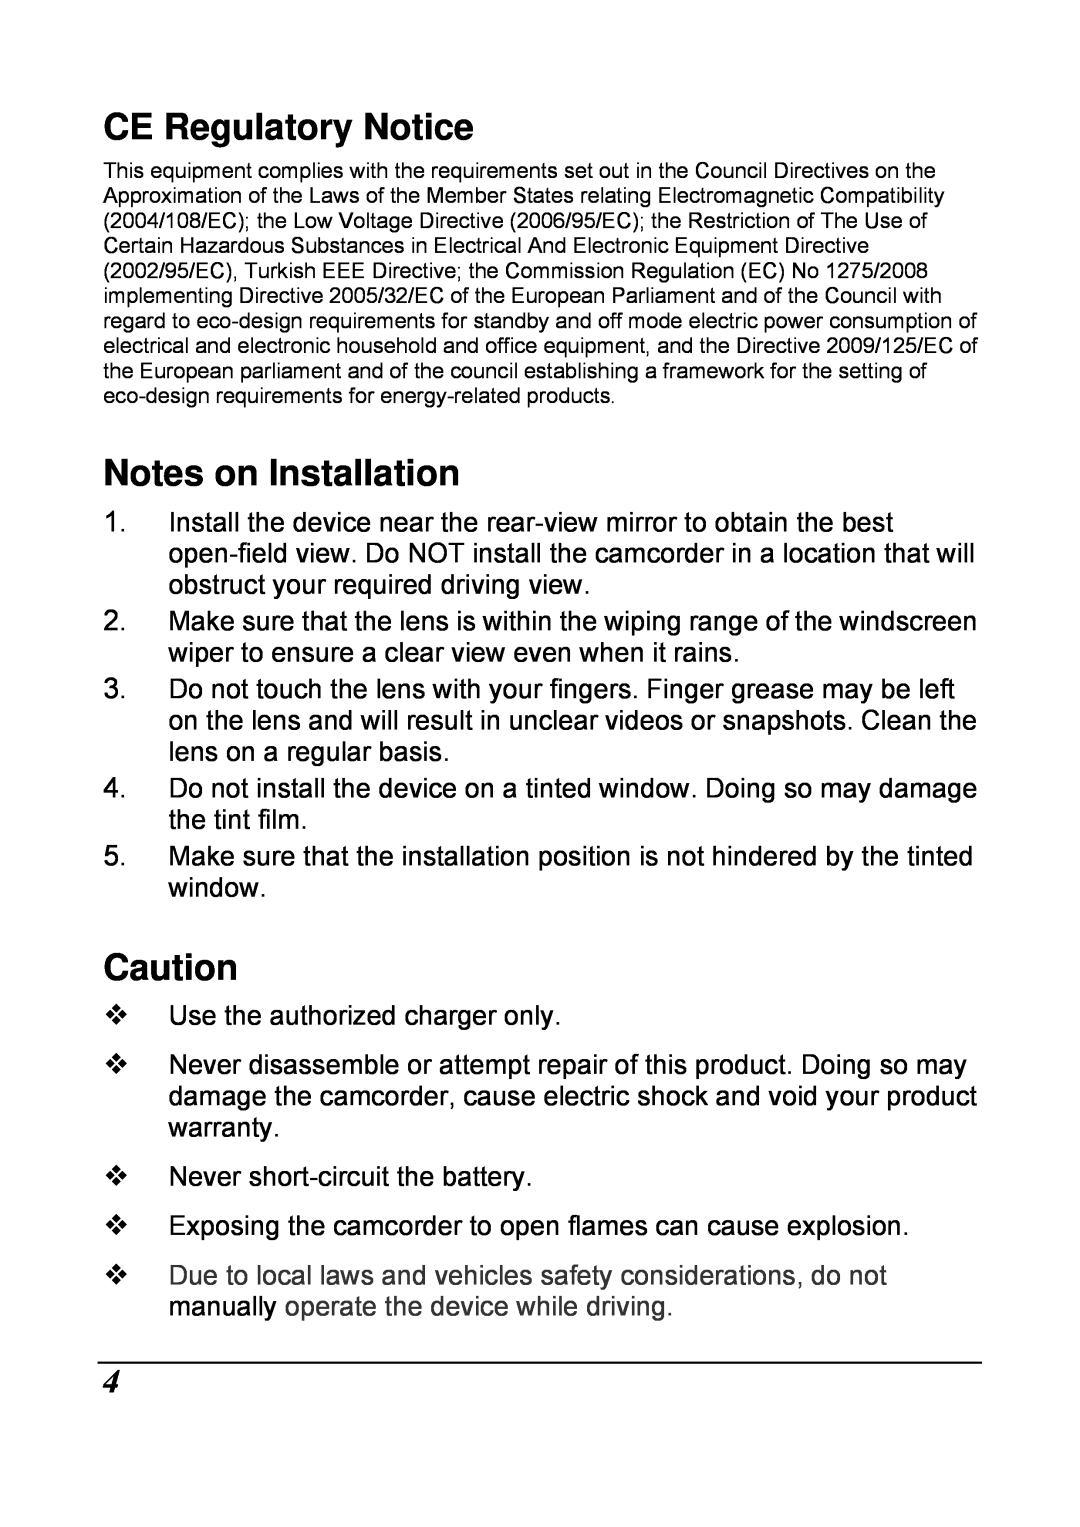 HP f210 Car manual CE Regulatory Notice, Notes on Installation 